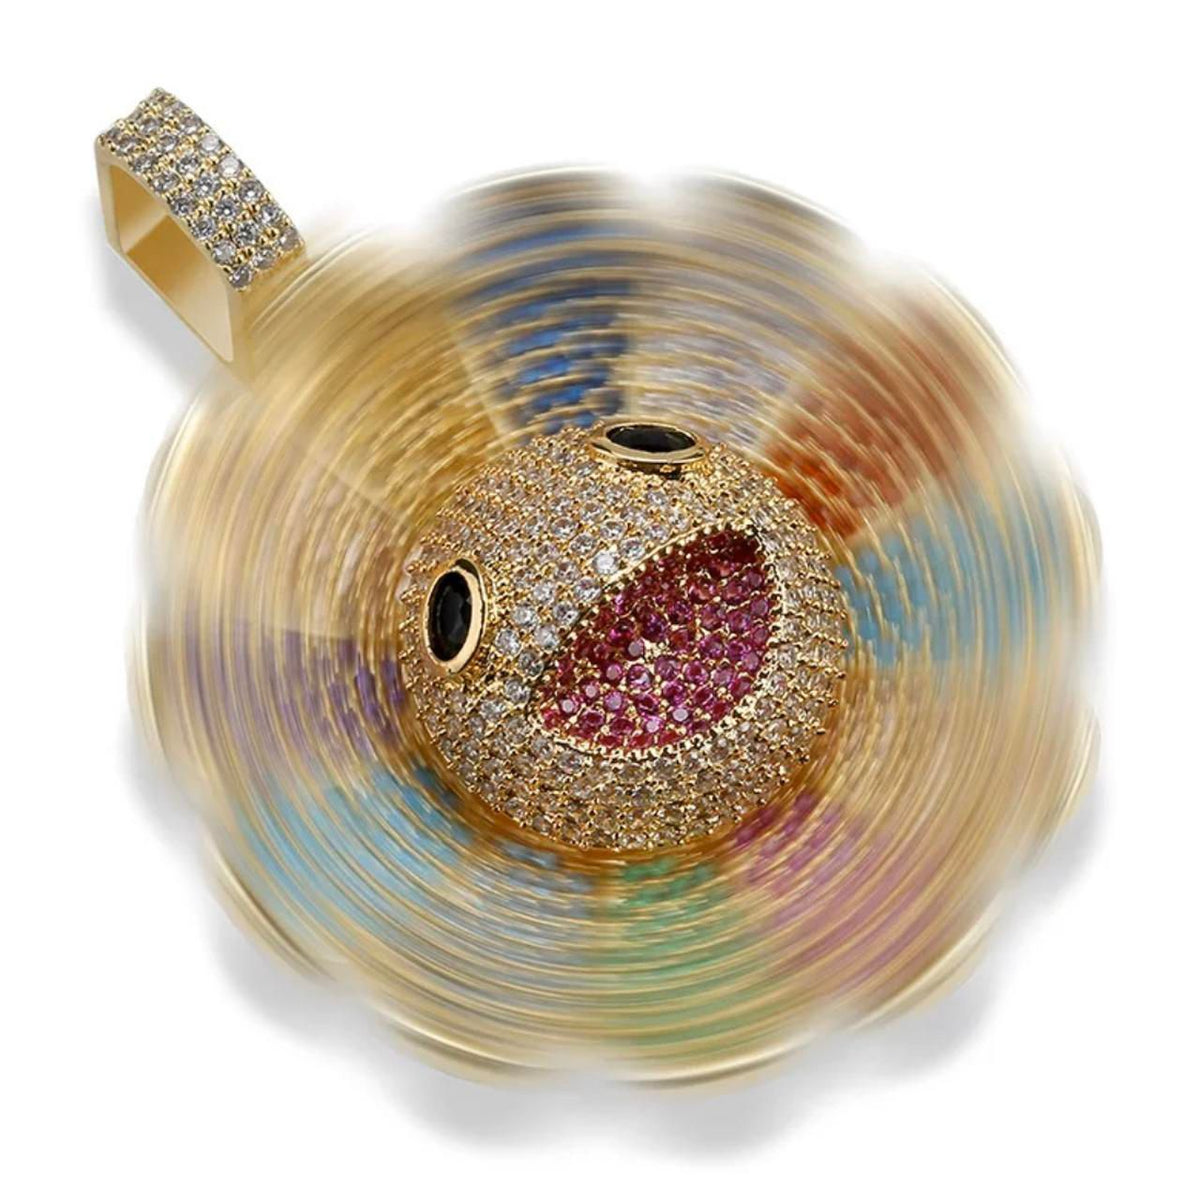 Takashi Murakami Flower Logo Golden Color Rhinestone Spinning Necklace and Chain Set